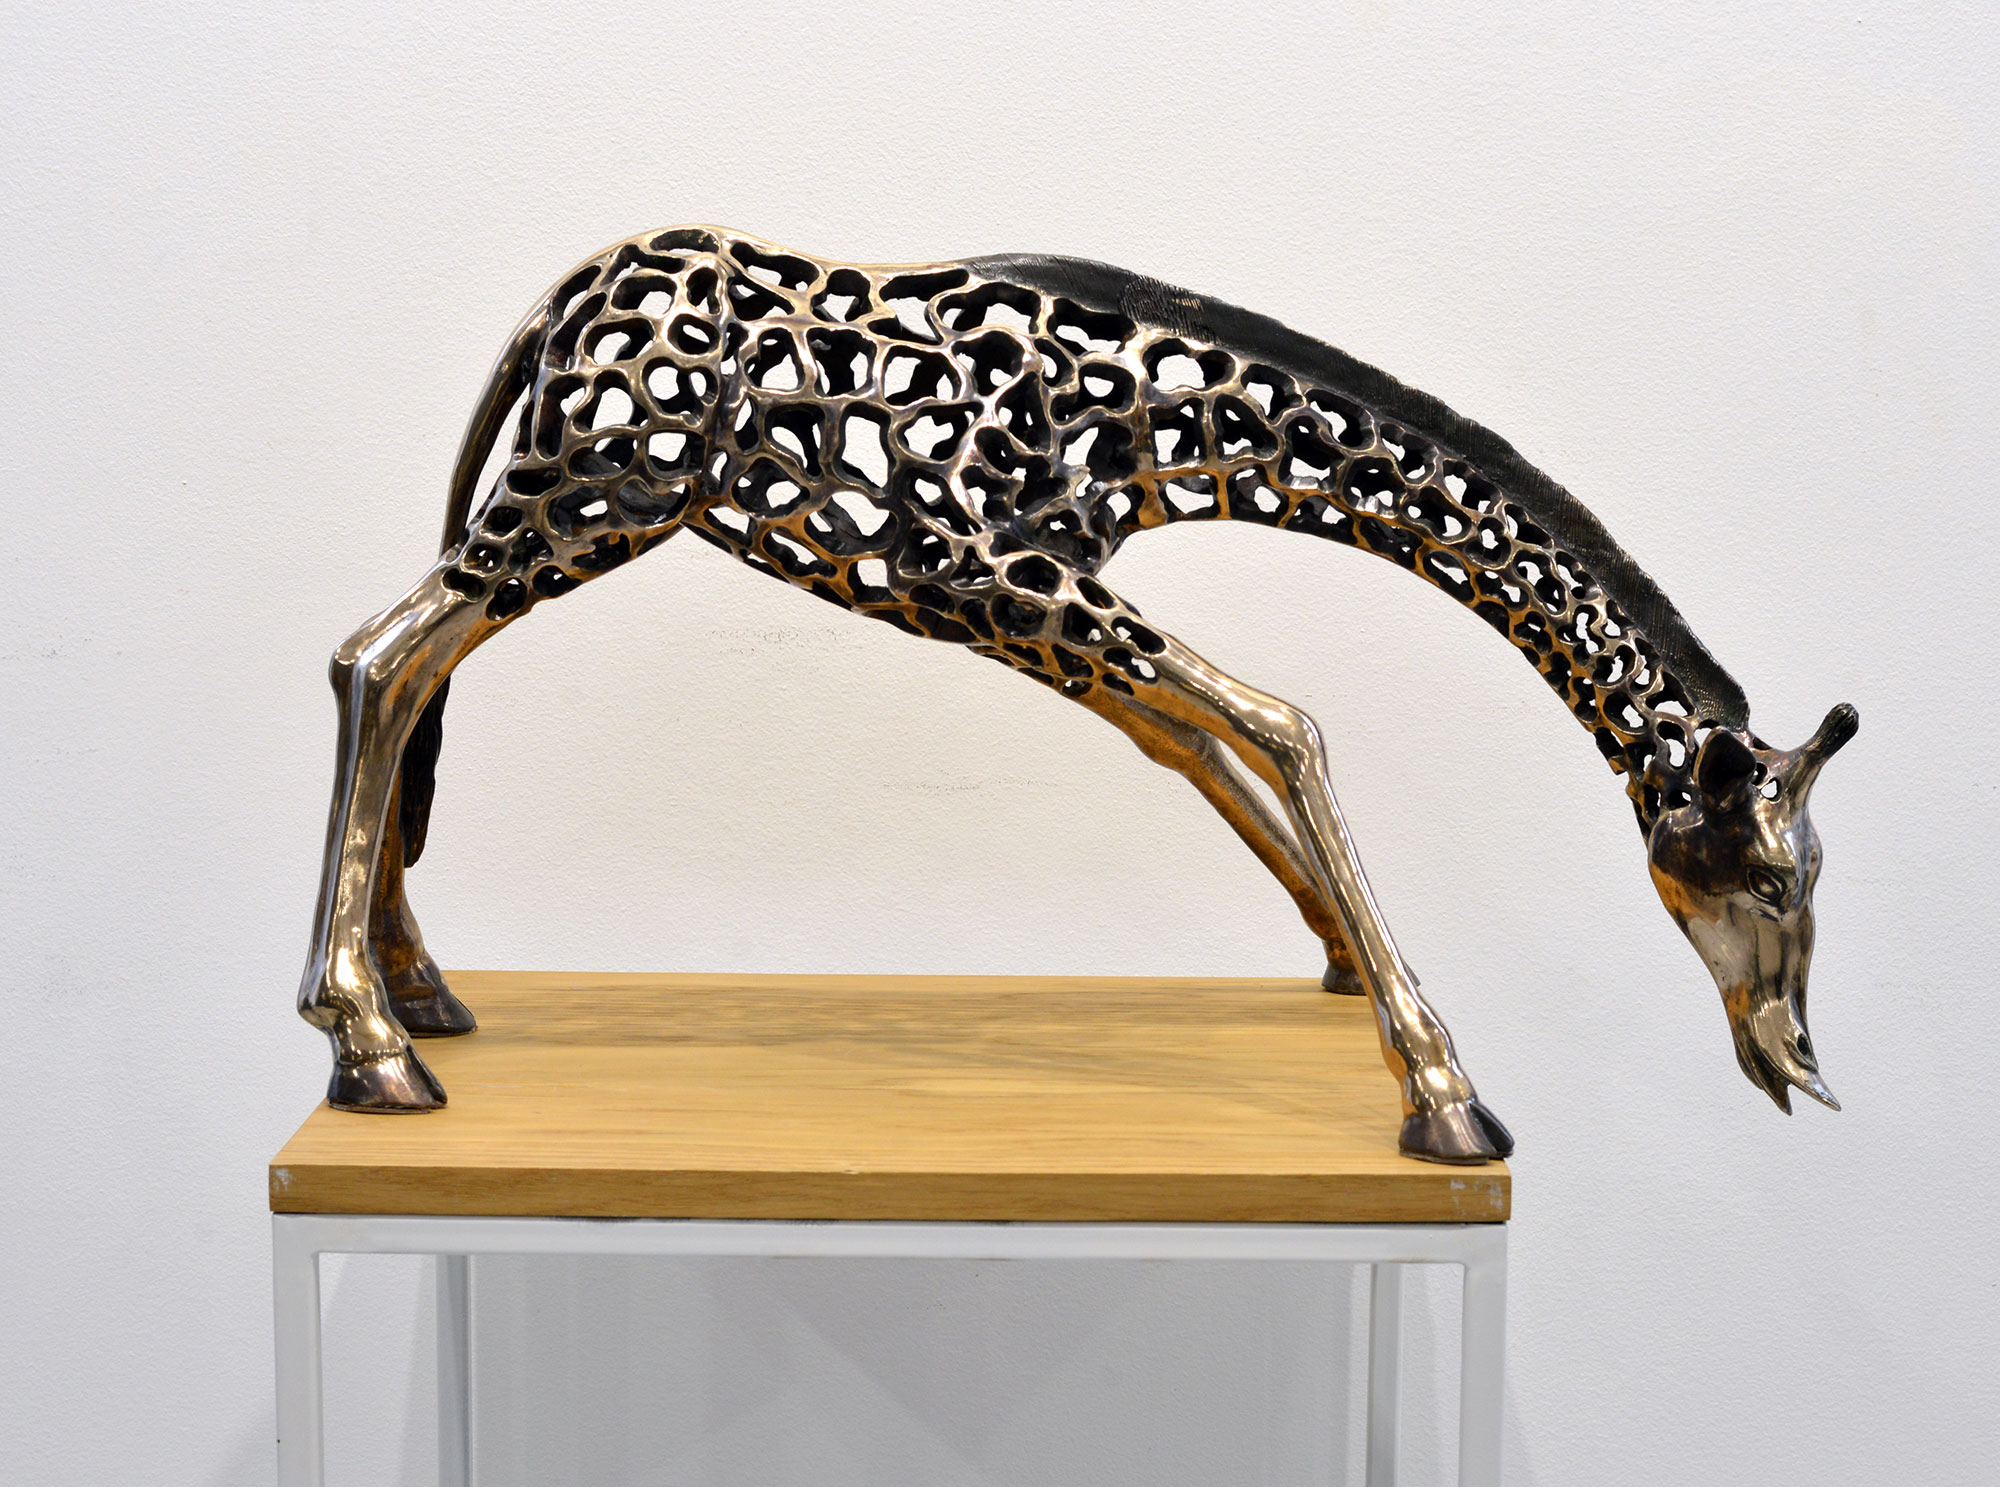 "Giraffe", 2000 - 3